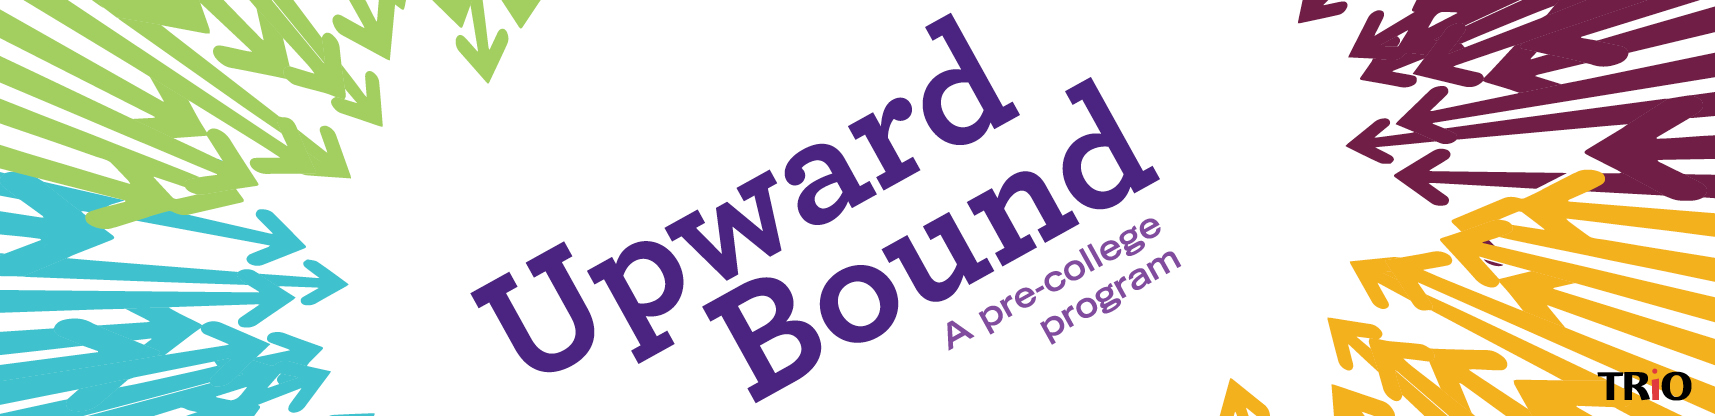 Upward Bound: a pre-college program